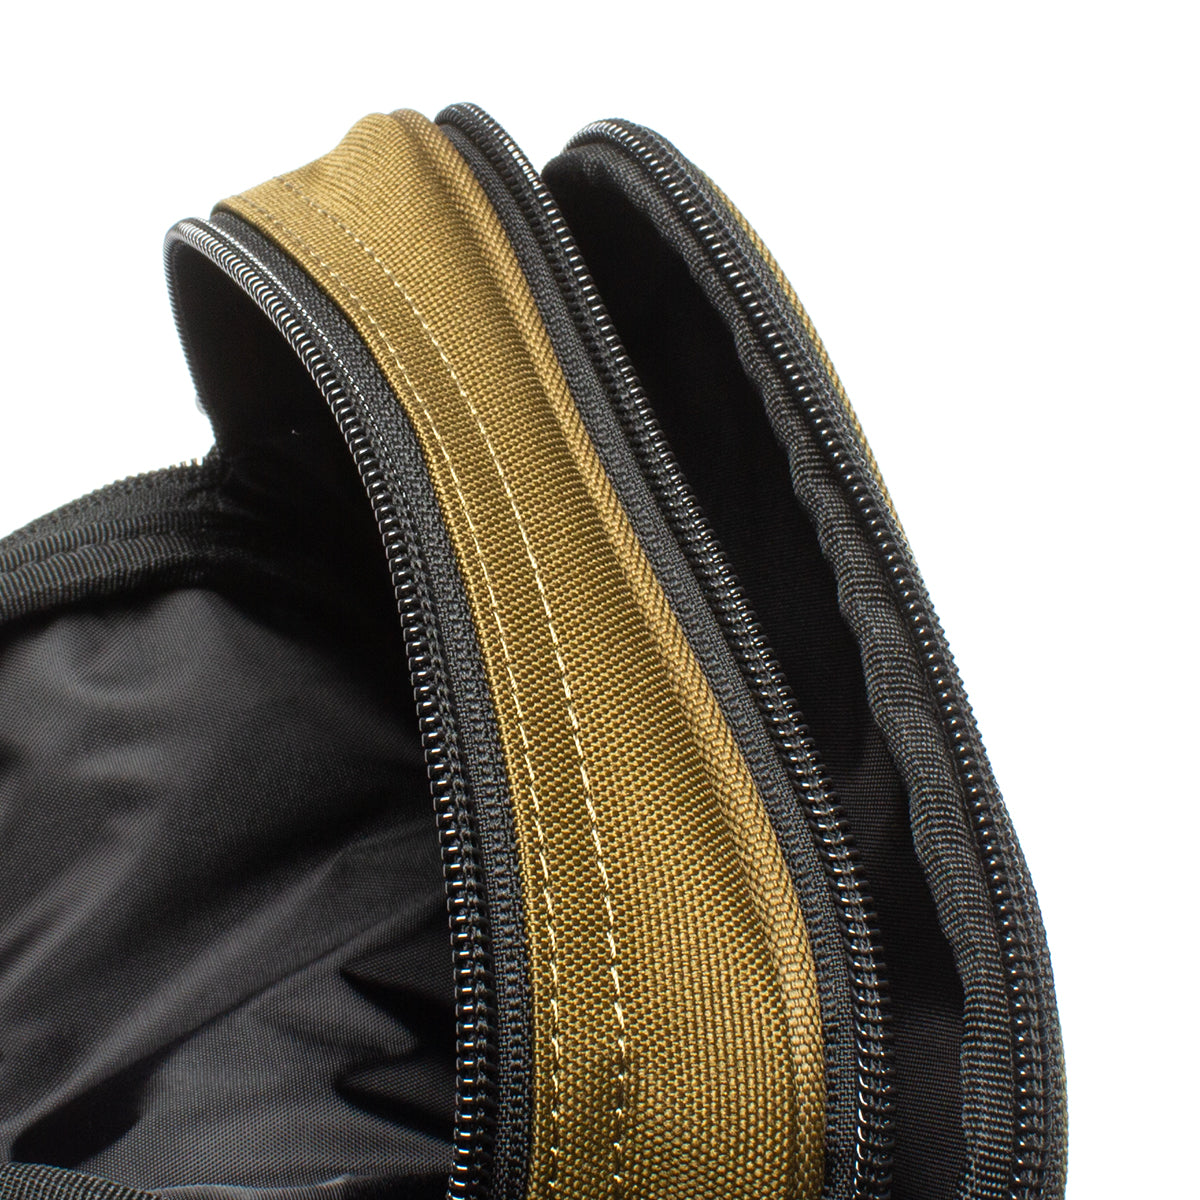 Carhartt WIP - Essentials Small Black - Bag